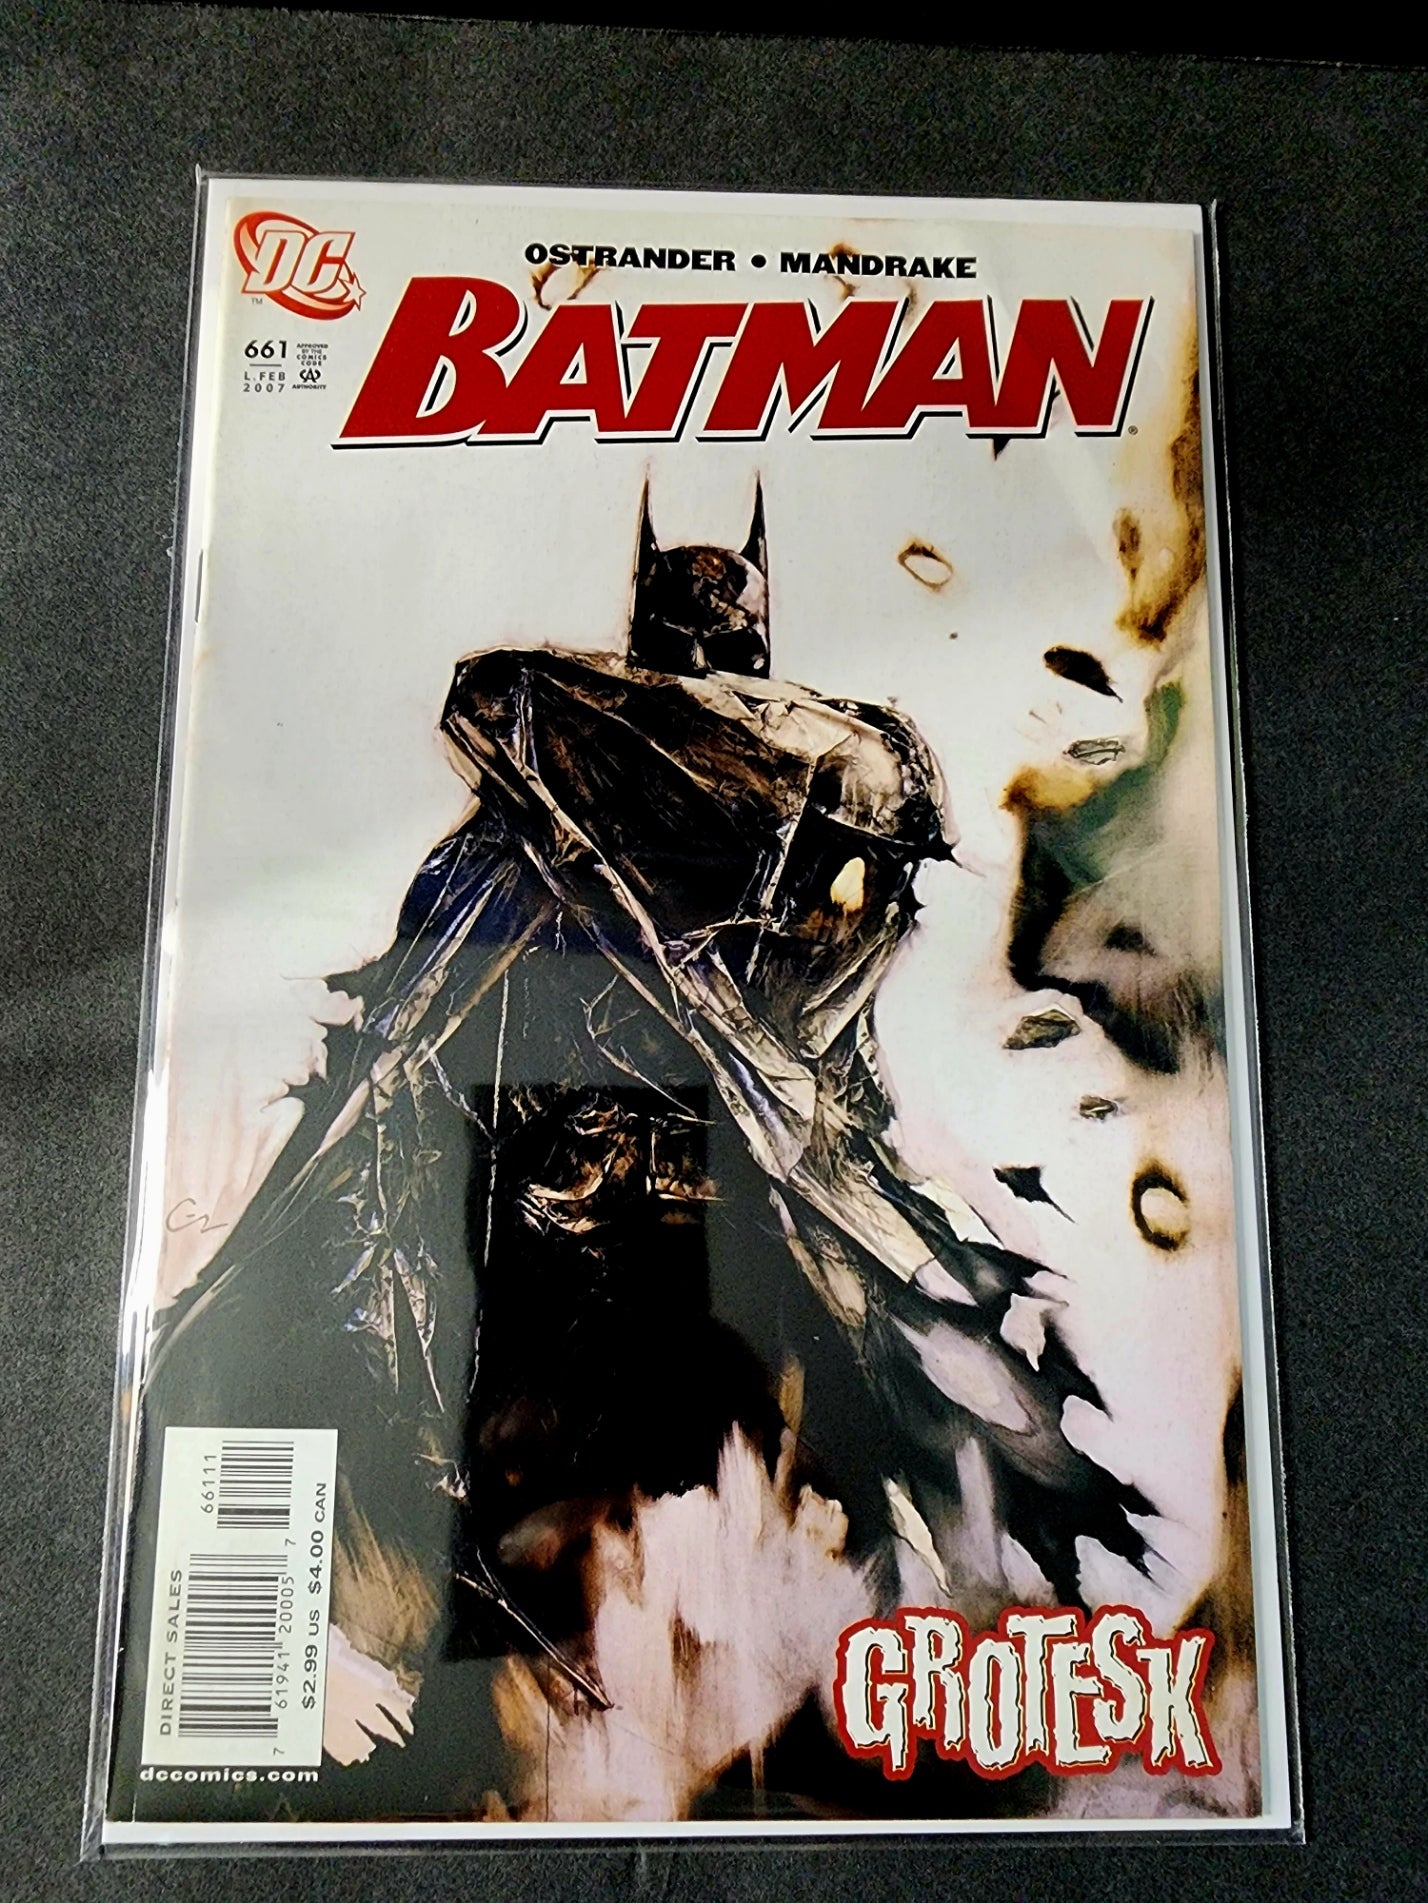 Batman #661 (VF-)